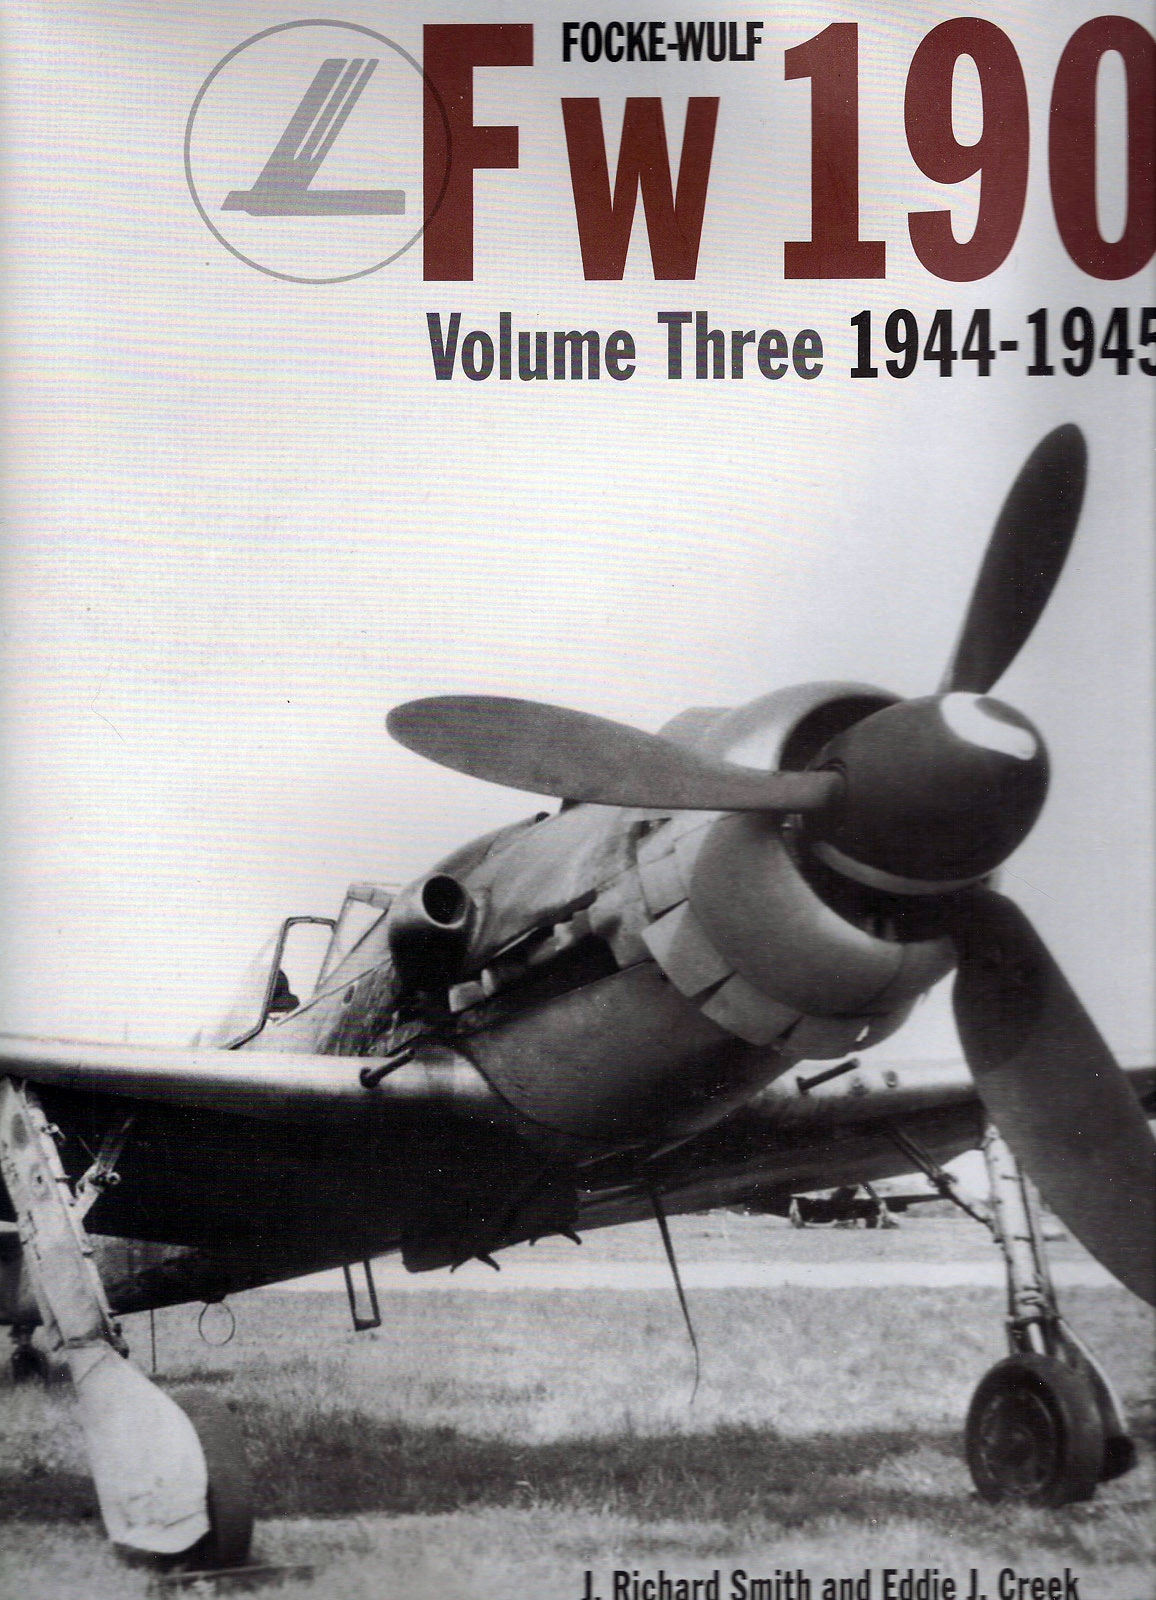 Focke-Wulf Fw190 Volume Three 1944-1945 | IPMS/USA Reviews